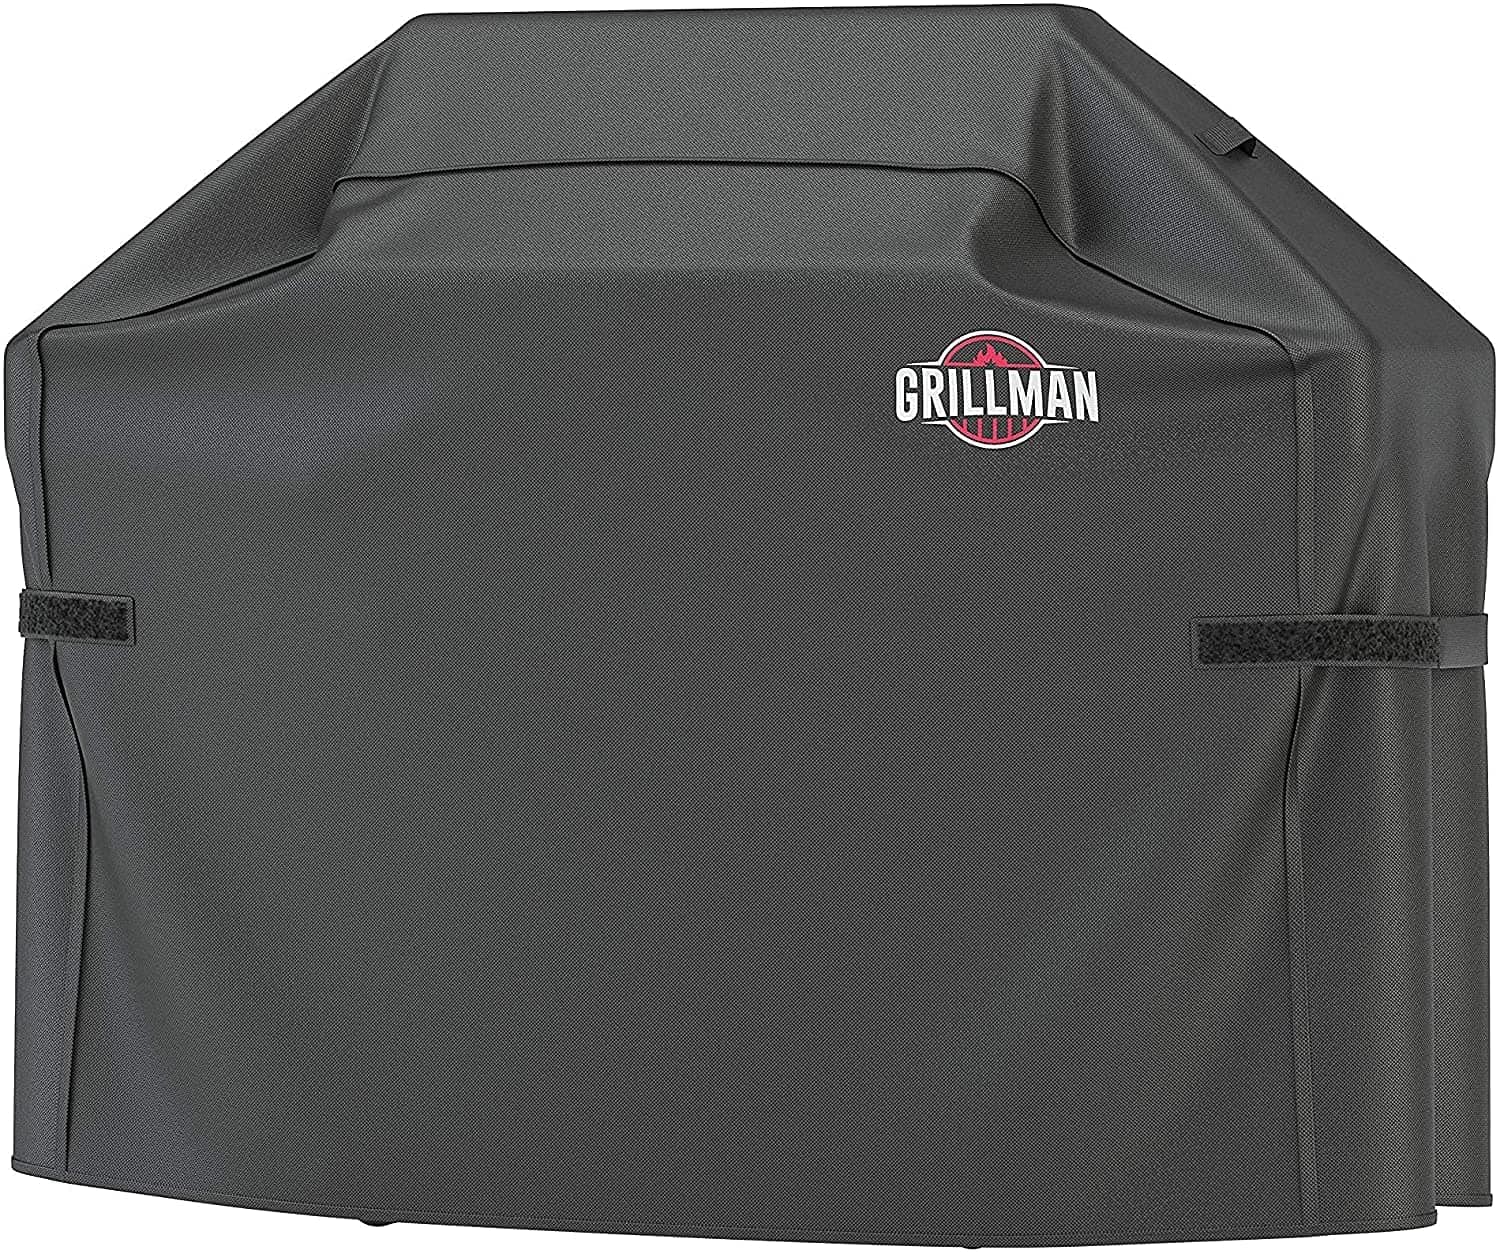 The best heavy-duty grill cover- Grillman Premium